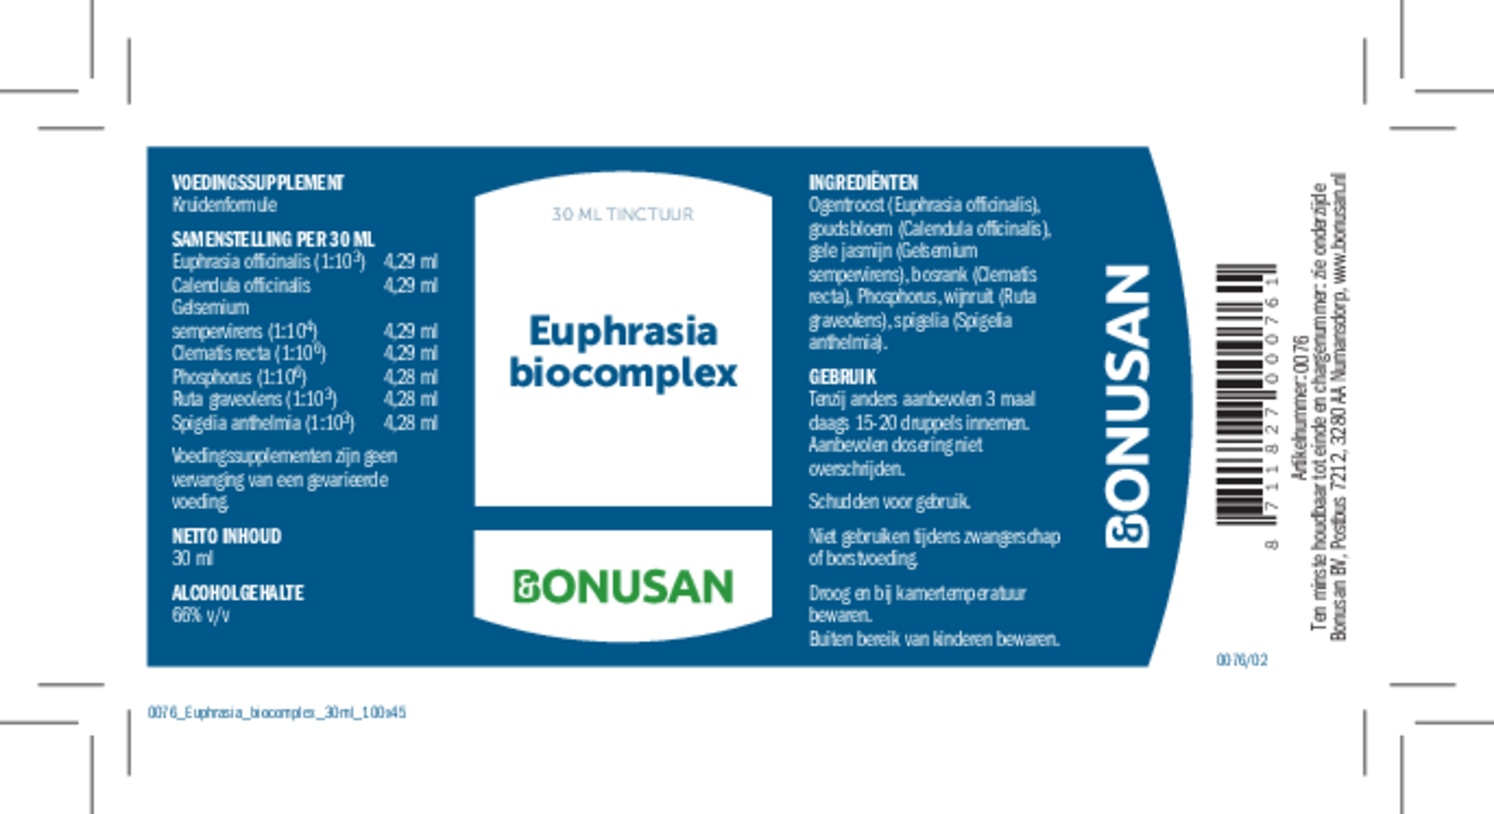 Euphrasia Biocomplex Tinctuur afbeelding van document #1, etiket